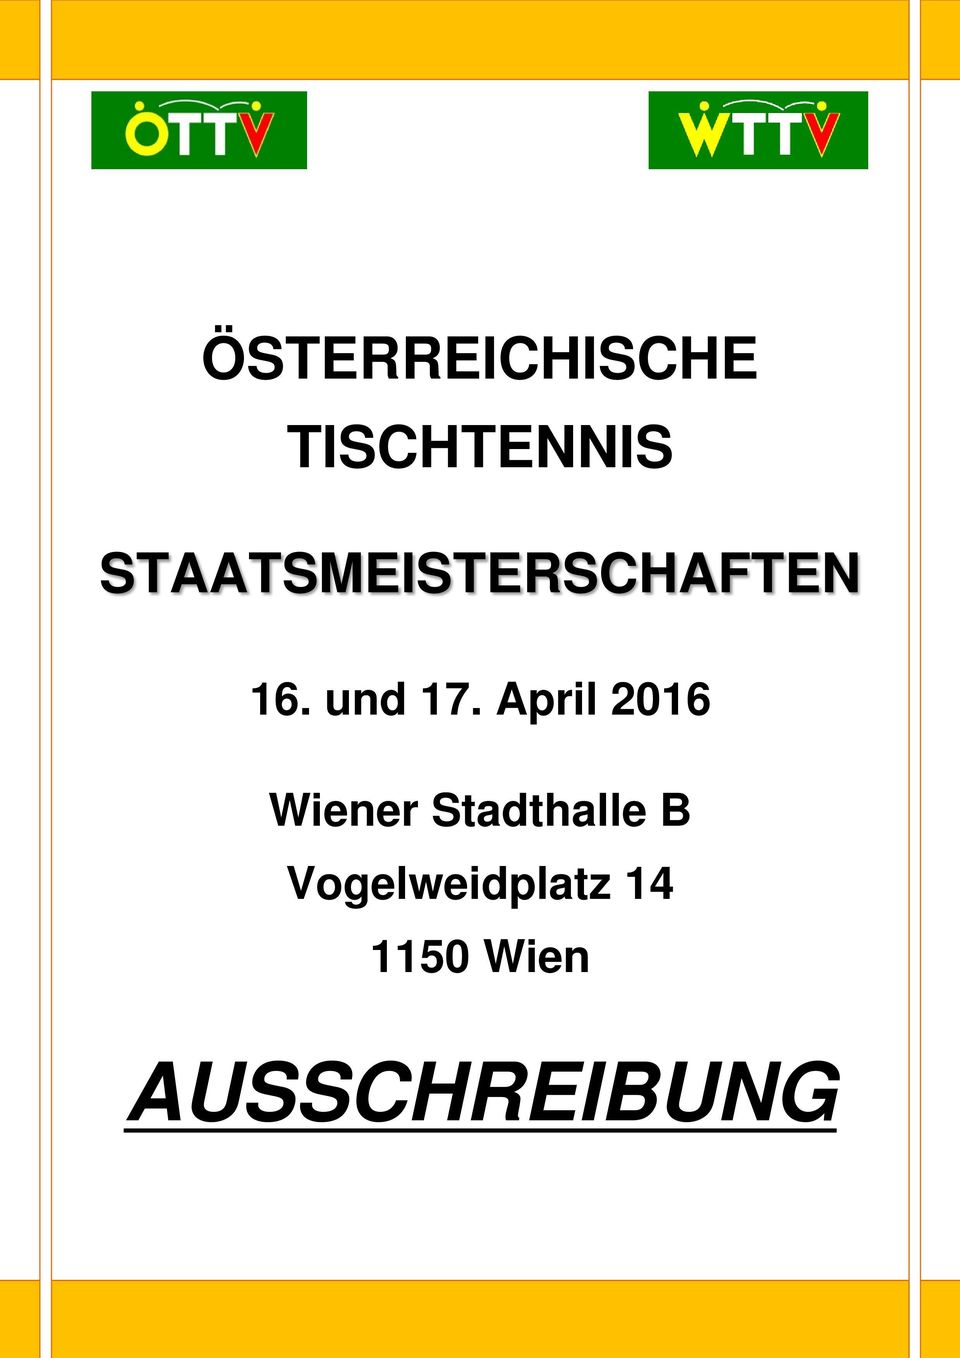 April 2016 Wiener Stadthalle B